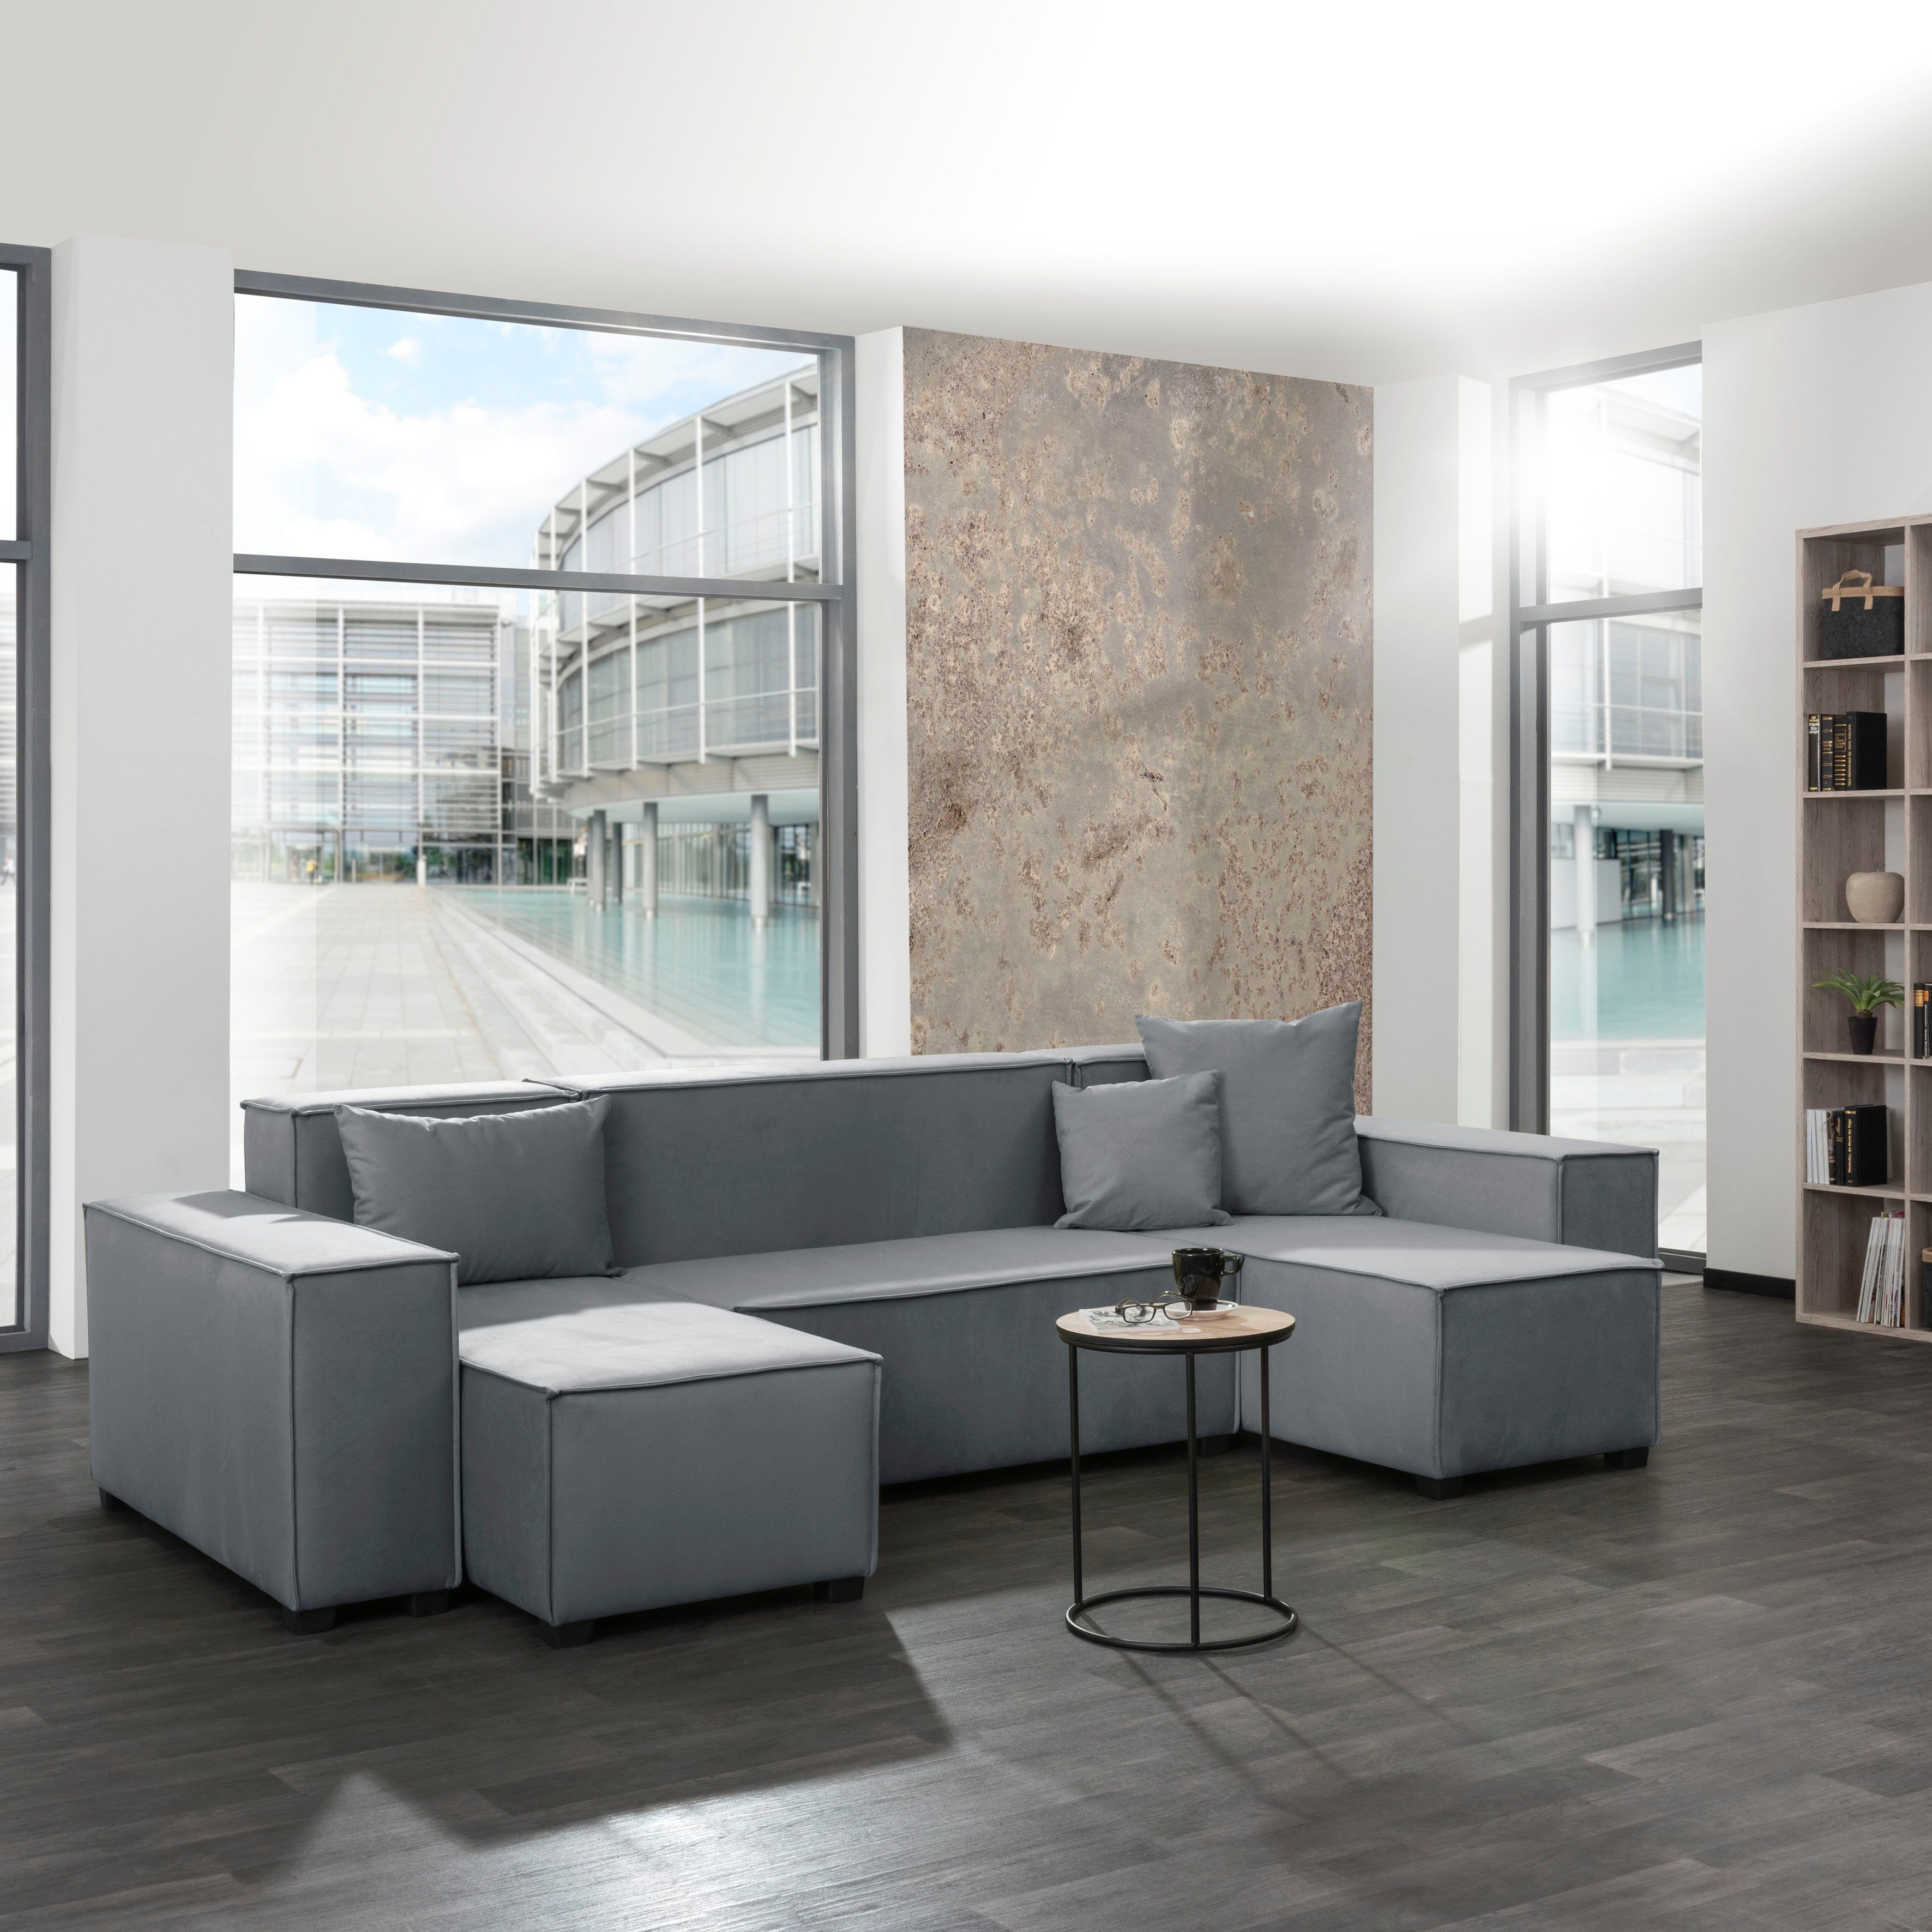 Max Winzer® Wohnlandschaft MOVE, Set, Sofa-Set 06 aus 8 Sitz-Elementen, inklusive 3 Zierkissen, kombinierbar